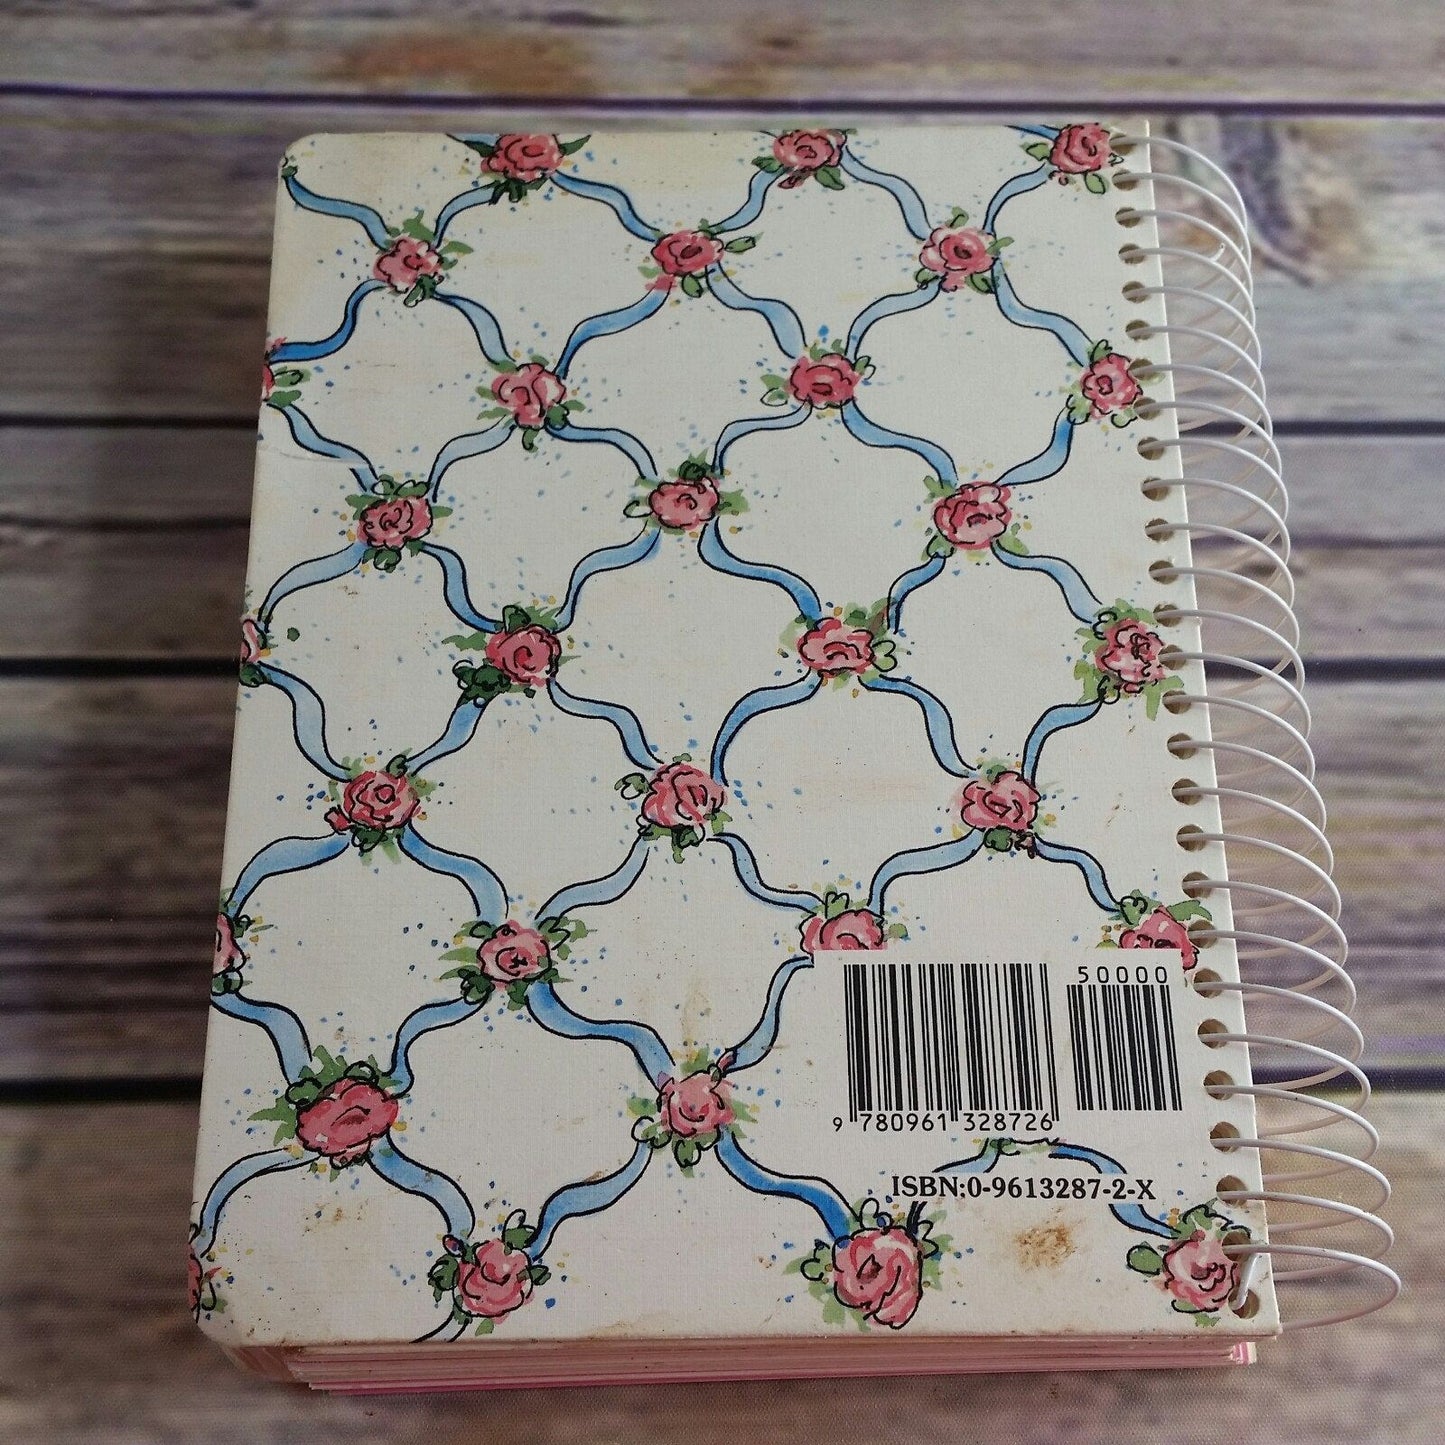 Vintage Recipe Notebook Keeper With Love From My Kitchen Storage Cookbook Journal 1989 Nancy Radcliffe Edwards Hardcover Spiral